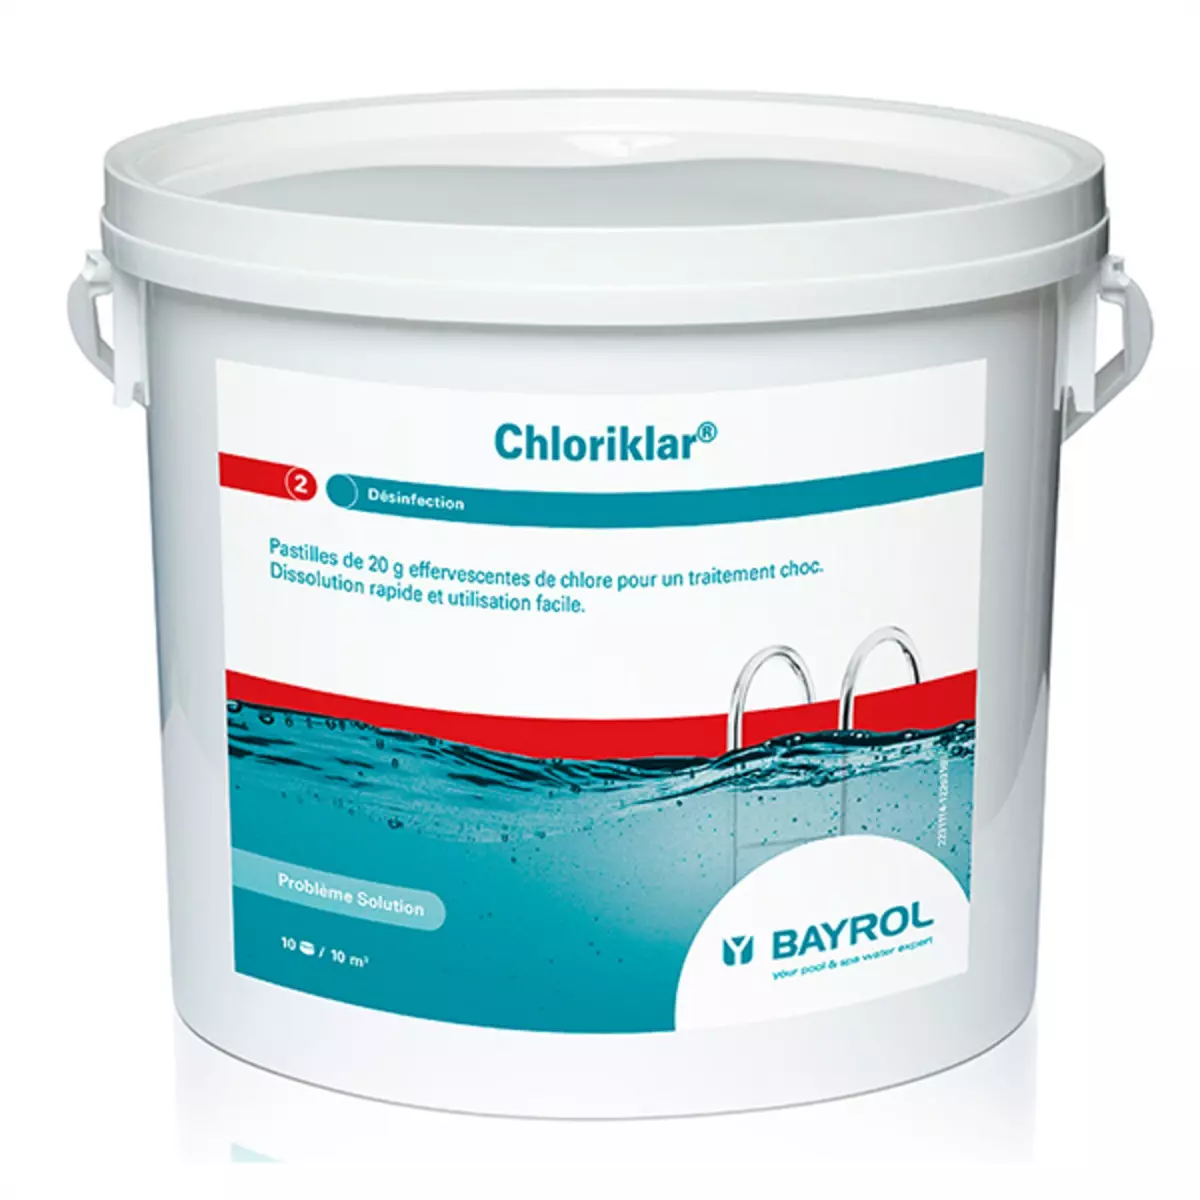 Bayrol Chlore choc pastille 5kg - chloriklar